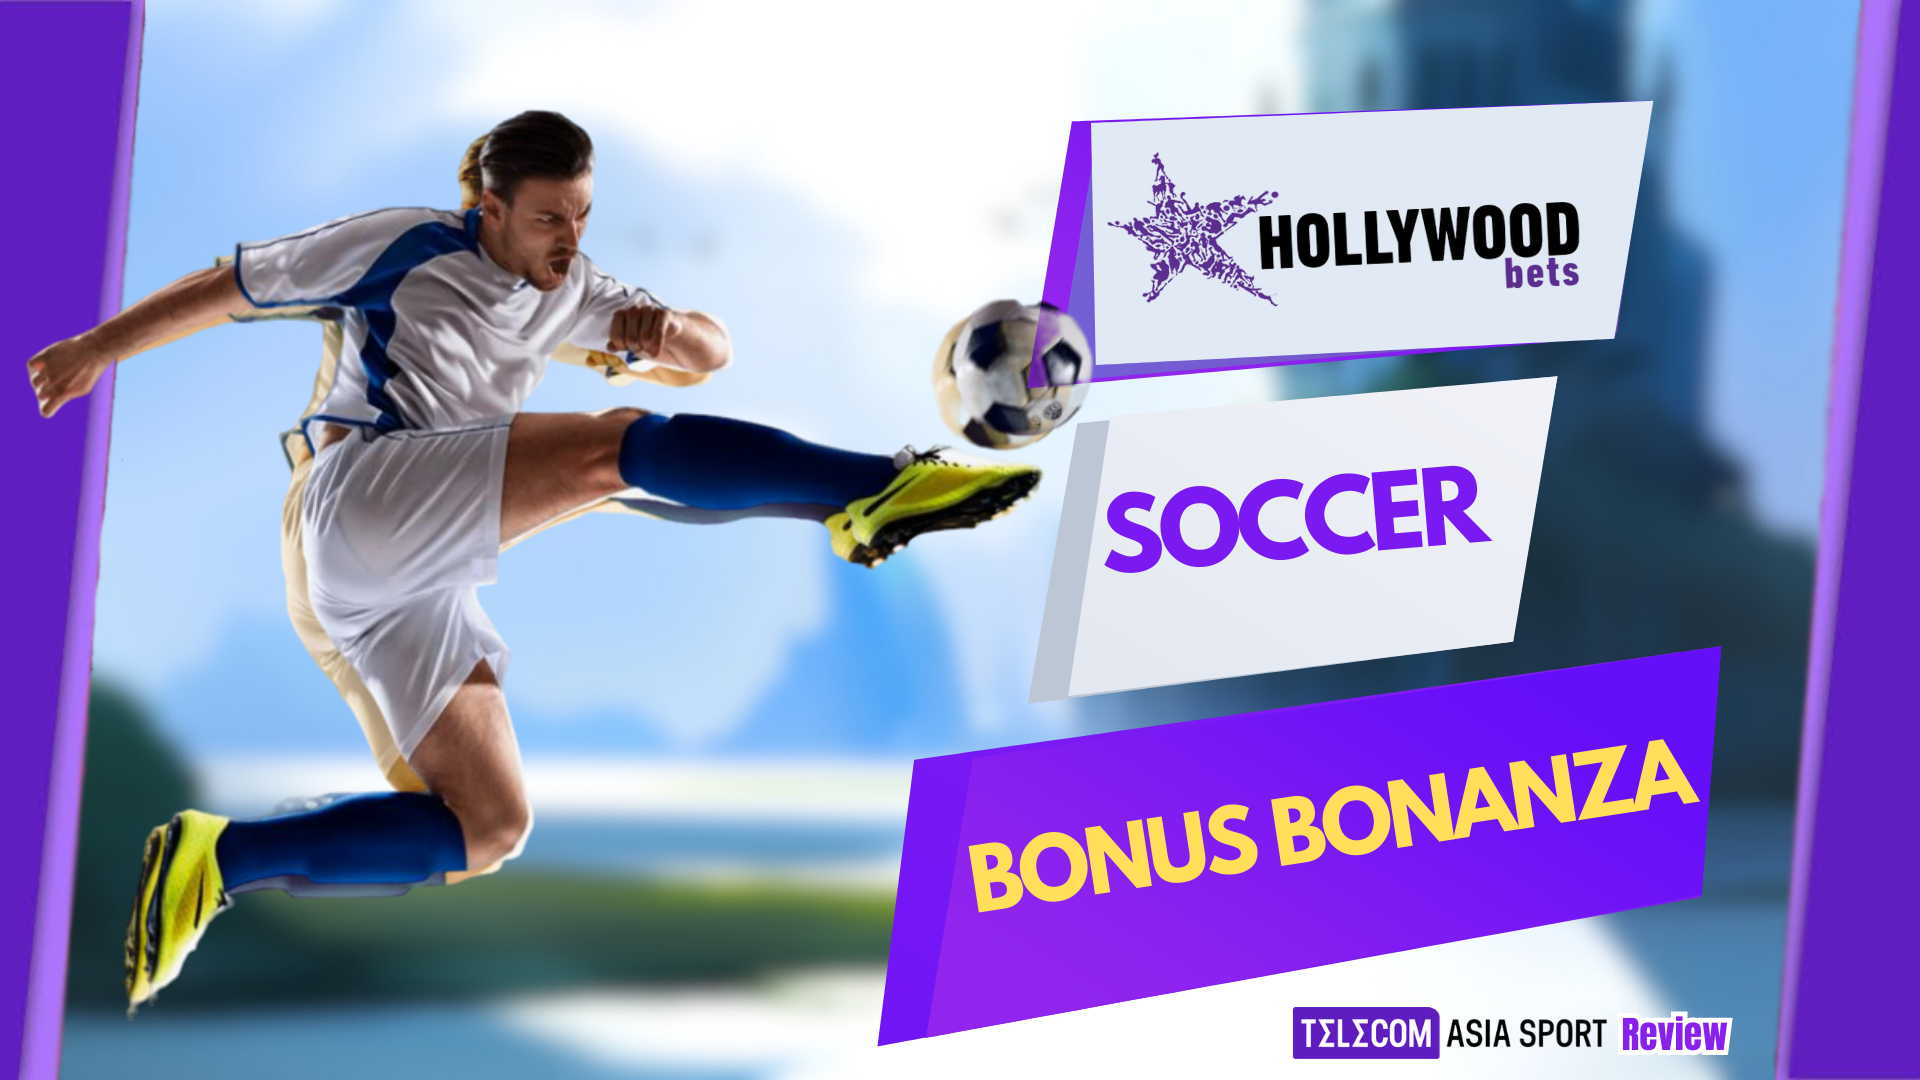 Hollywoodbets soccer bonanza offer